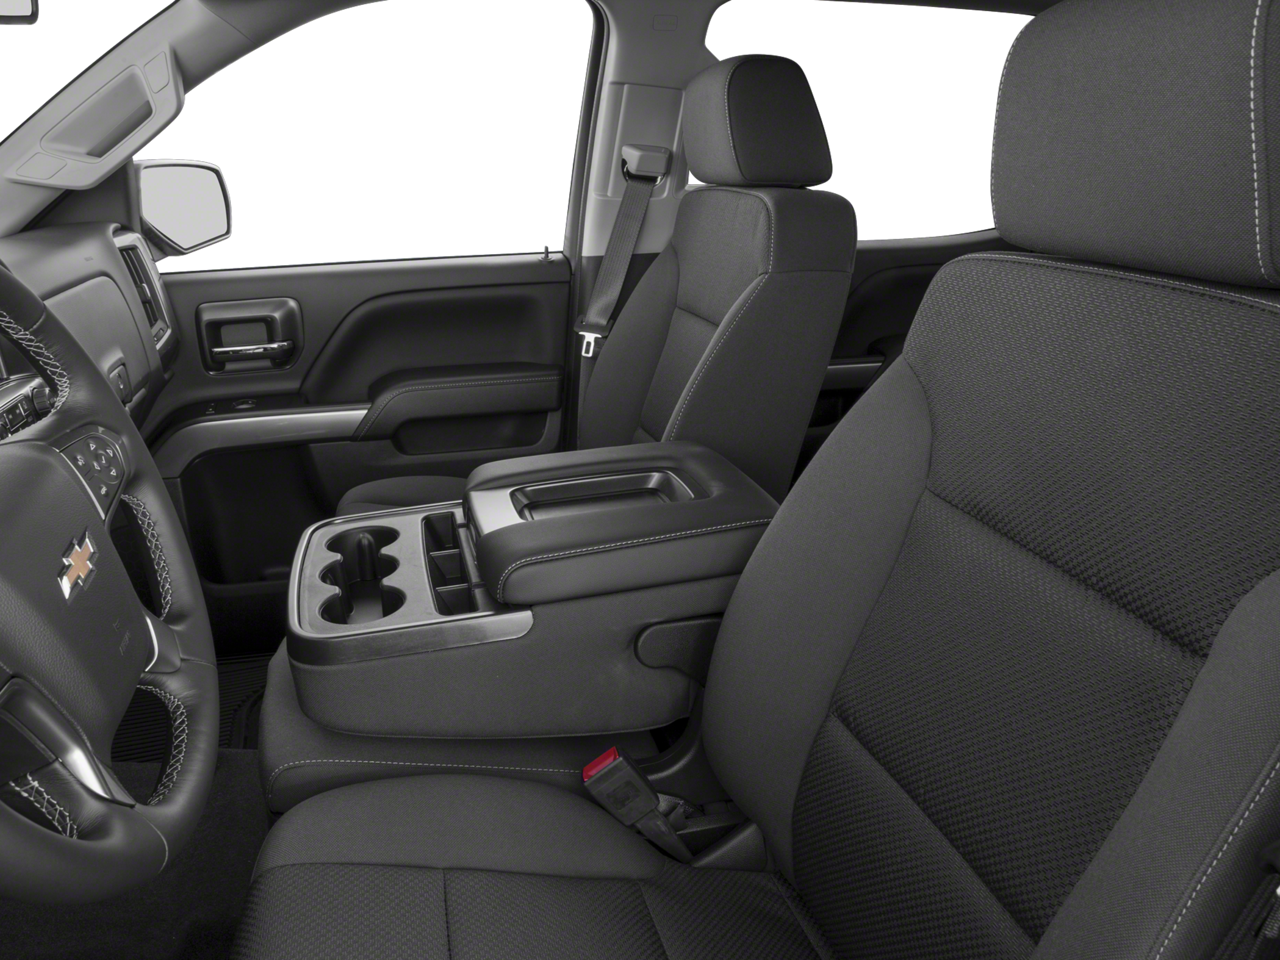 2018 Chevrolet Silverado 1500 Crew Cab LT 4WD Heated Seats All Star Edition 5.3L V8 Remote Start Rear Camera Assist Steps Cruise